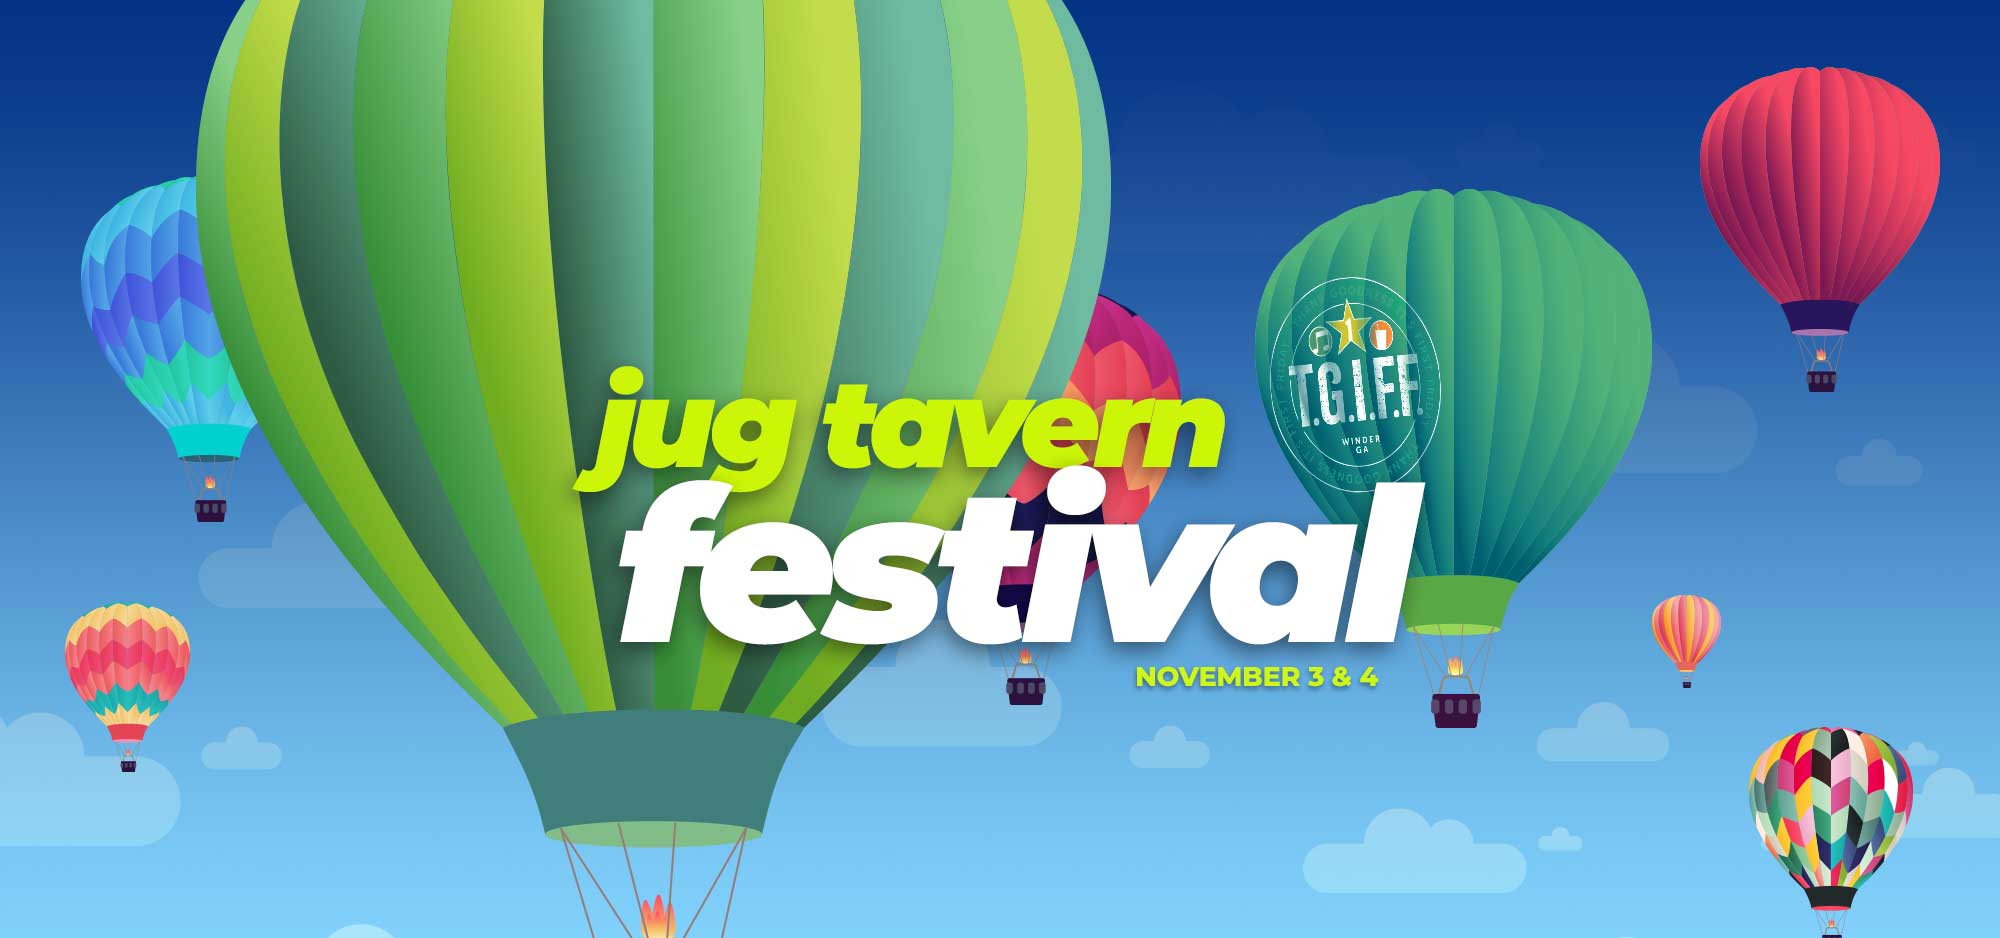 TGIFF Presents: Jug Tavern Festival cover image